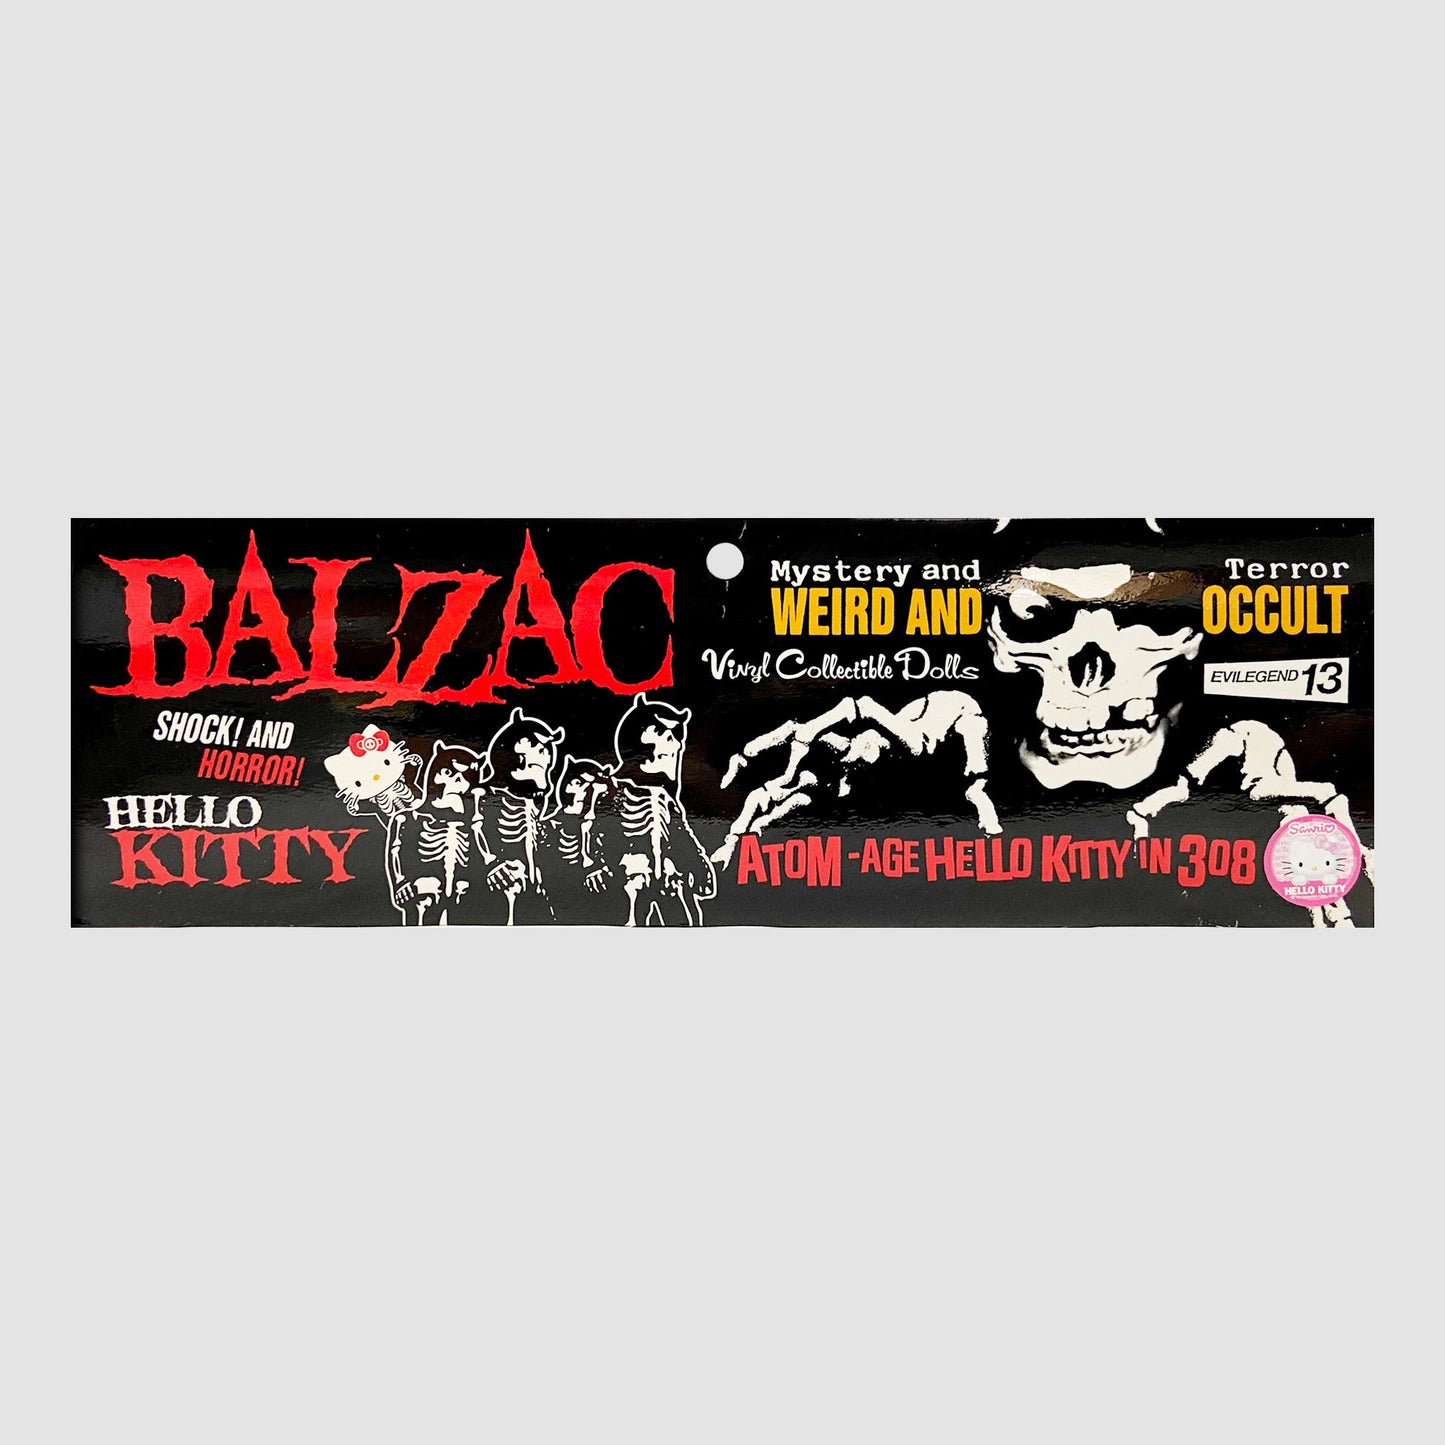 MEDICOM TOY x Balzac x Sanrio: VCD - Atom Age Hello Kitty in 308 Black Vinyl Figure